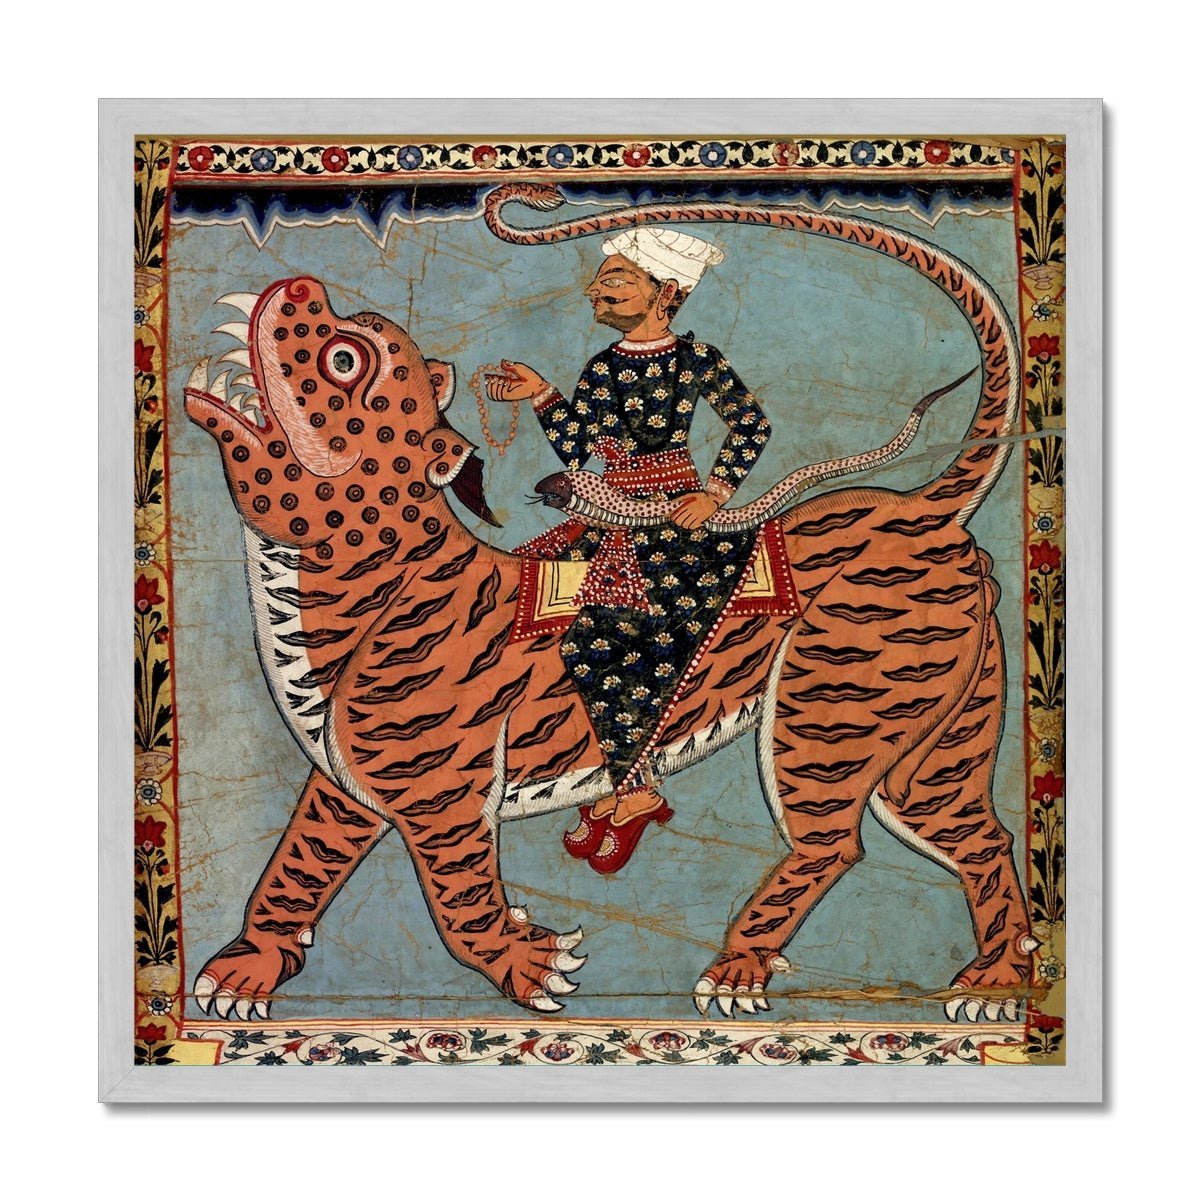 Fine art 12"x12" / Silver Frame Pir Gazi and His Tiger Antique Gold and Silver, Indian Art, Islamic Art, Muslim Art, Sufi Rumi Mystic Cat, Antique Gold and Silver Framed Print